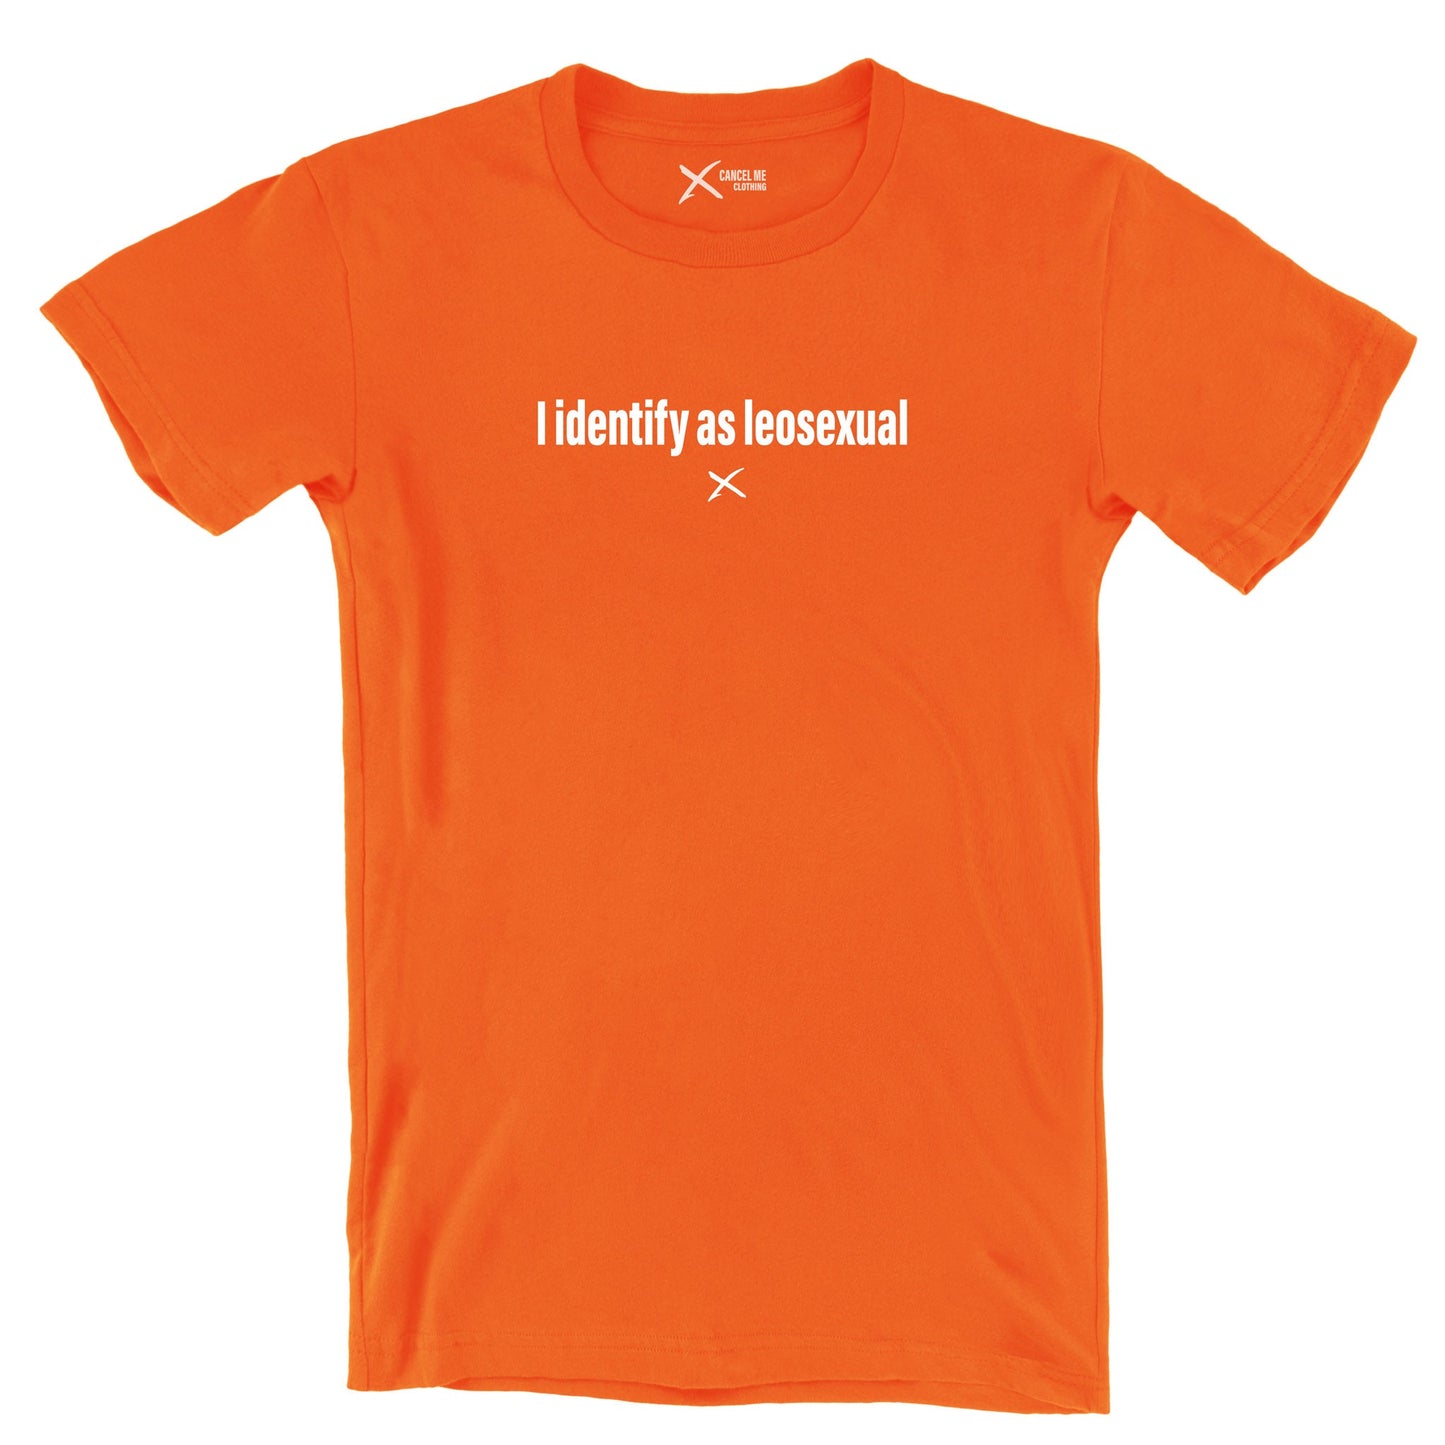 I identify as leosexual - Shirt